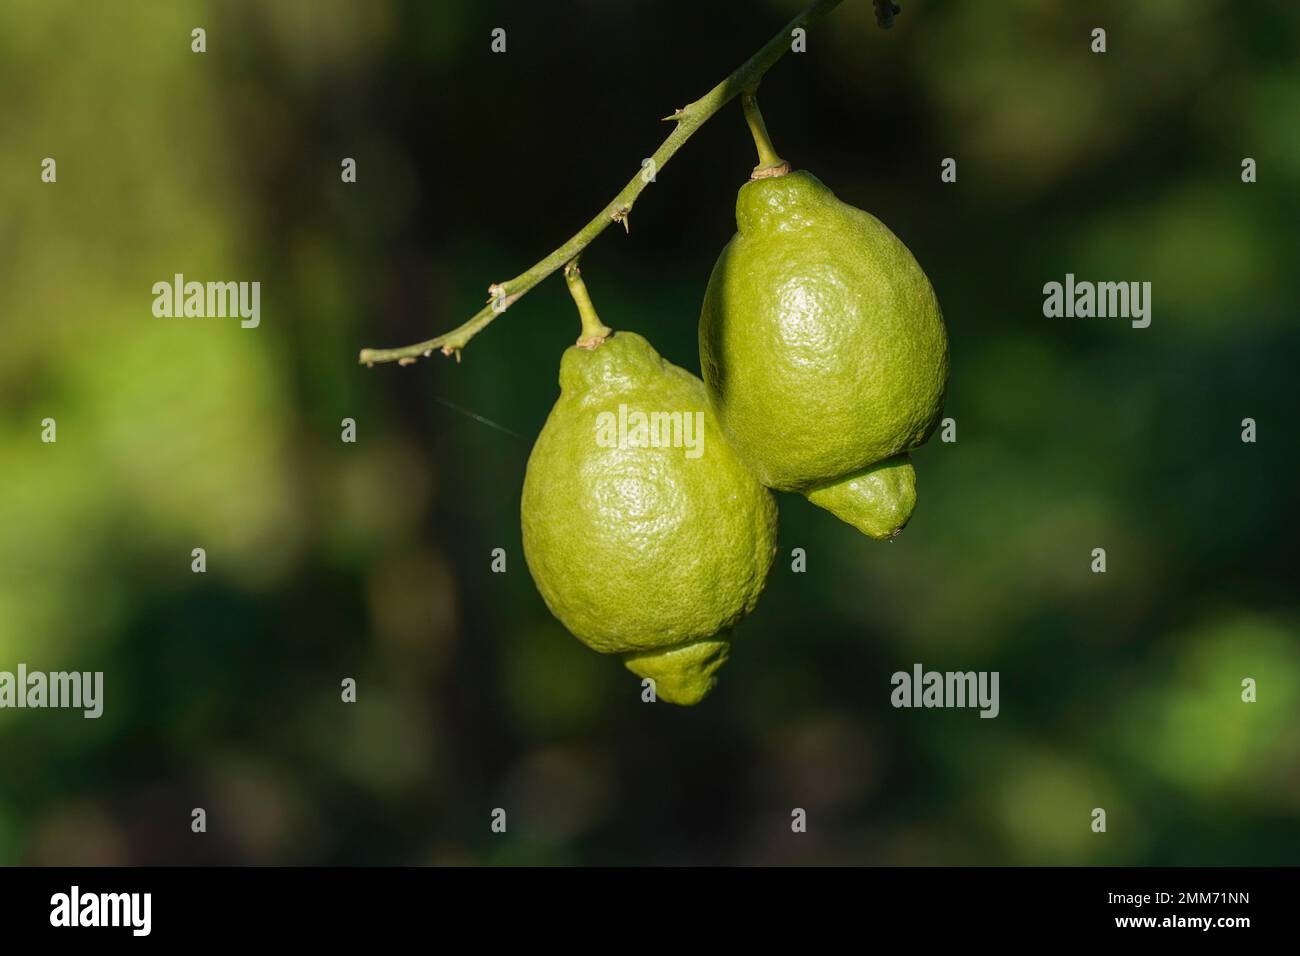 Two unripe lemons hanging on a tree. Stock Photo